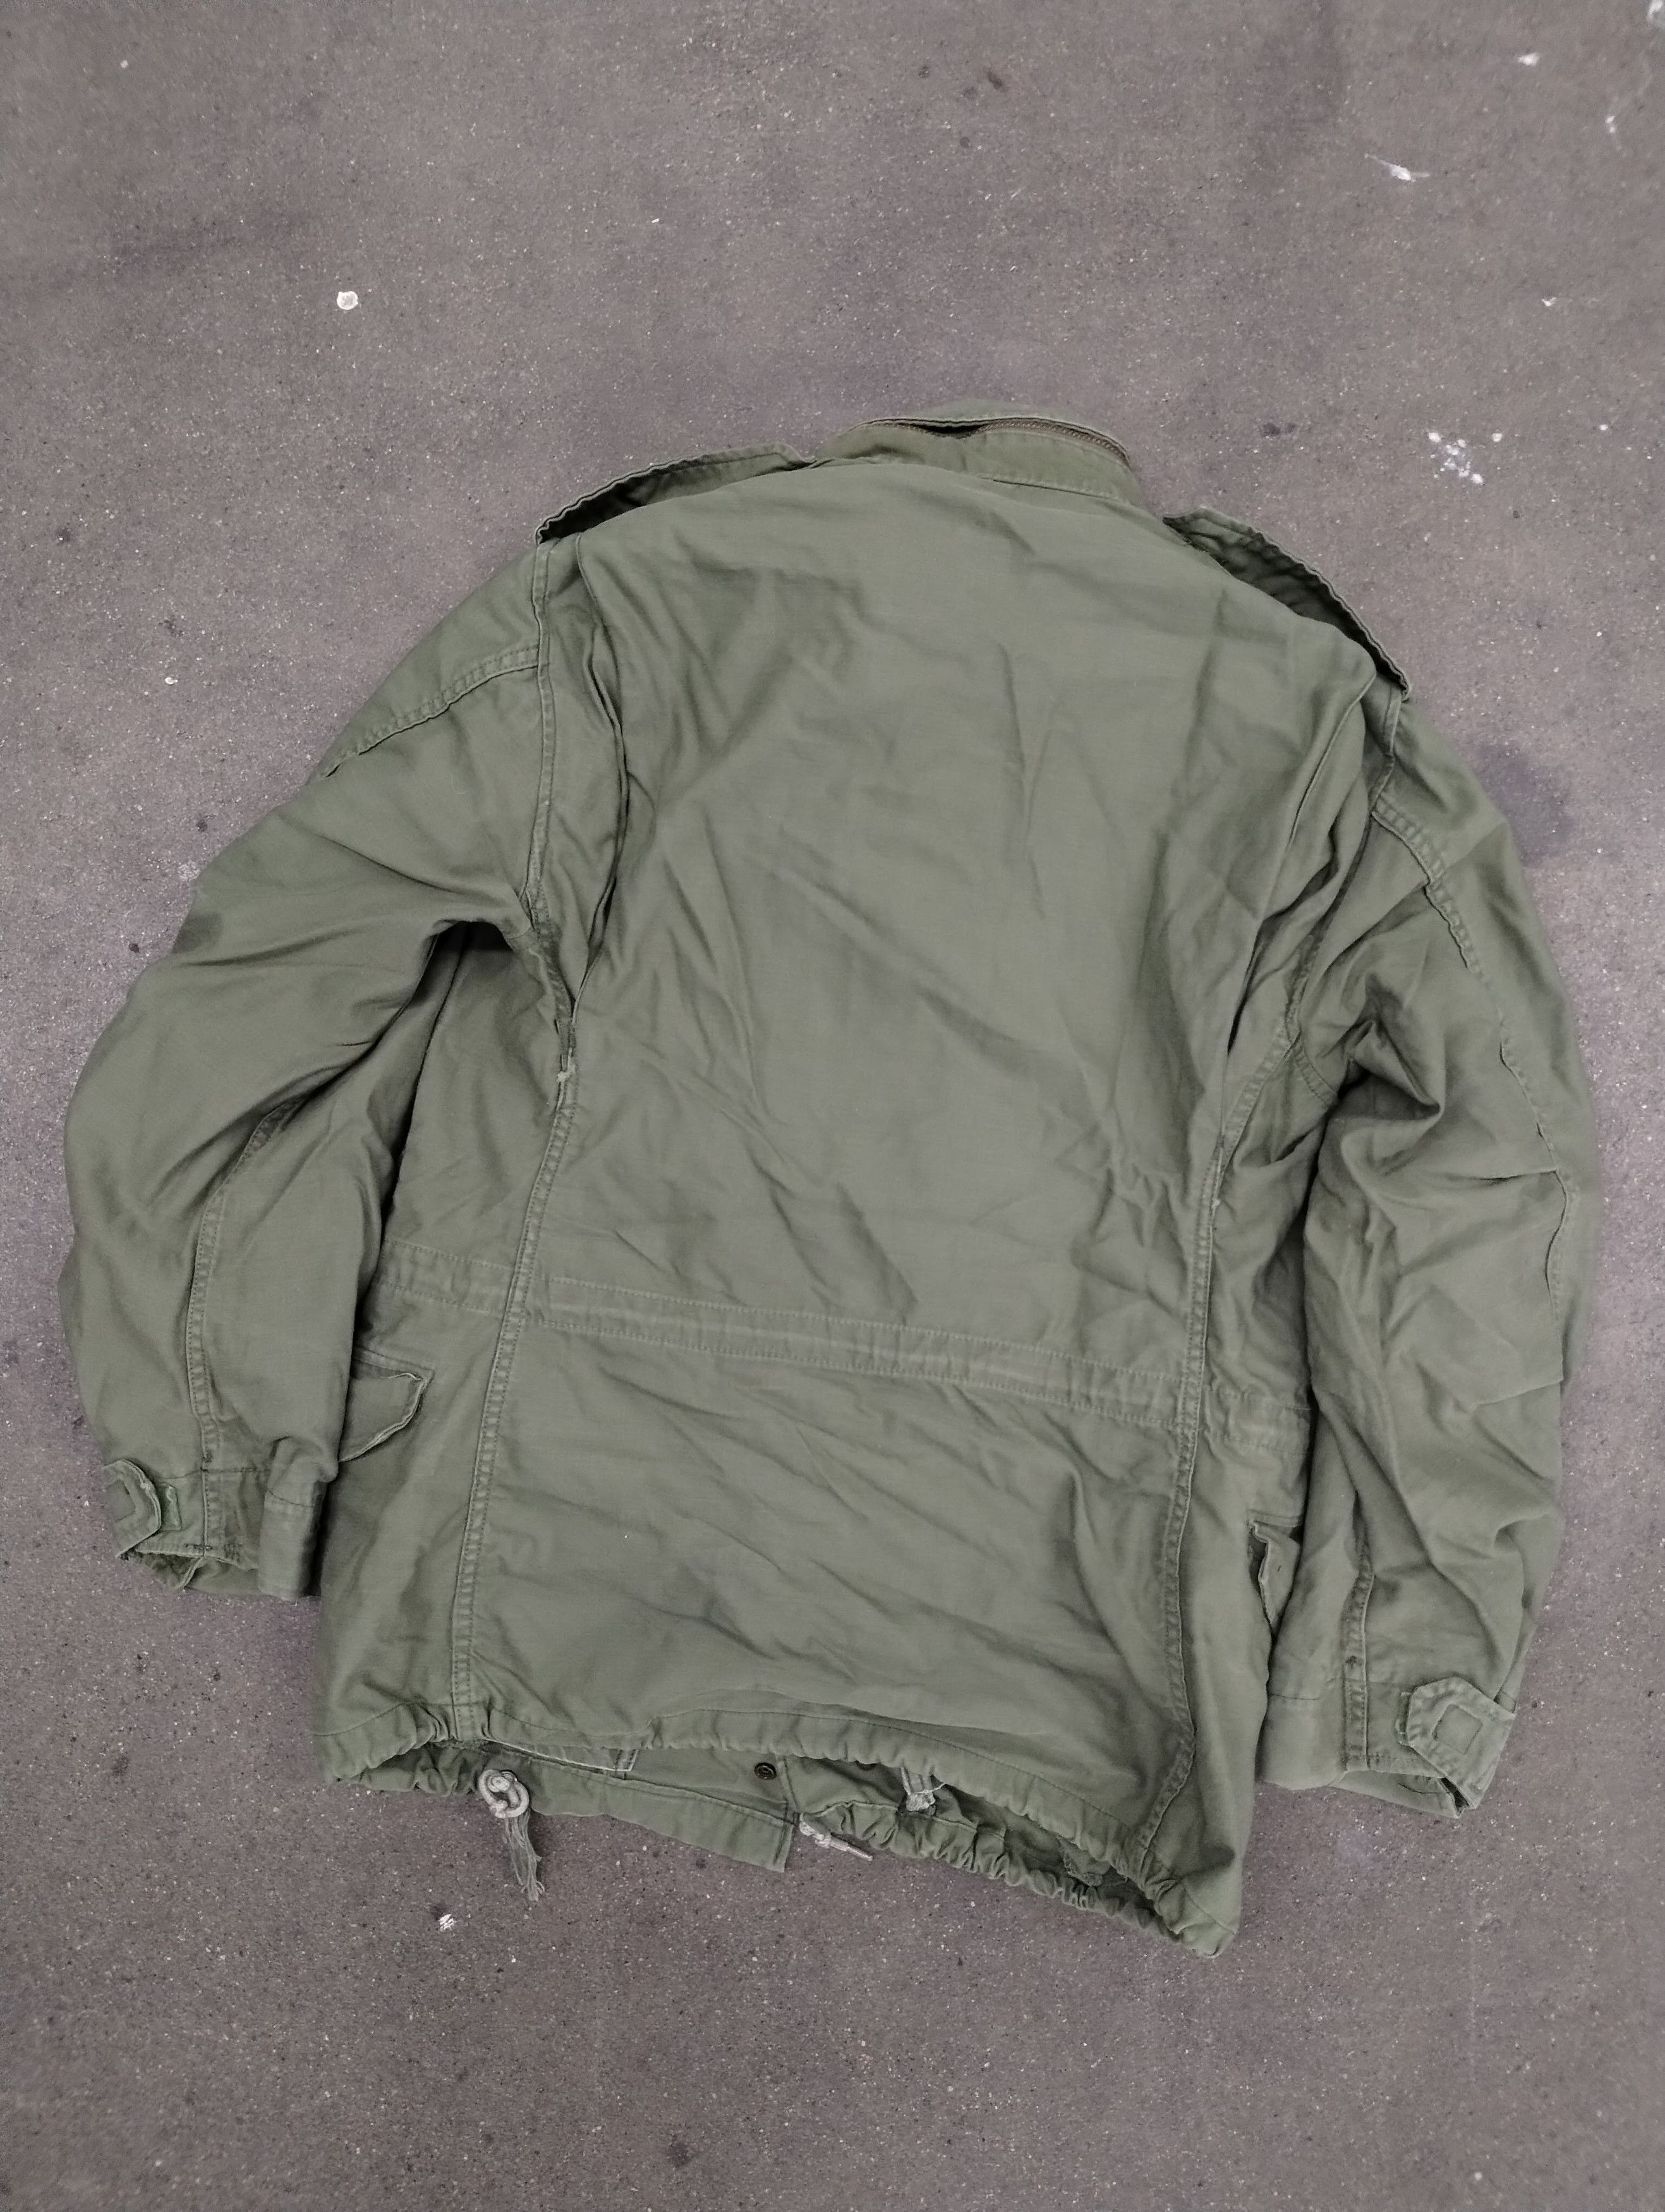 Vintage Vintage Military Zip Up Cotton Field Jacket Size US S / EU 44-46 / 1 - 4 Preview